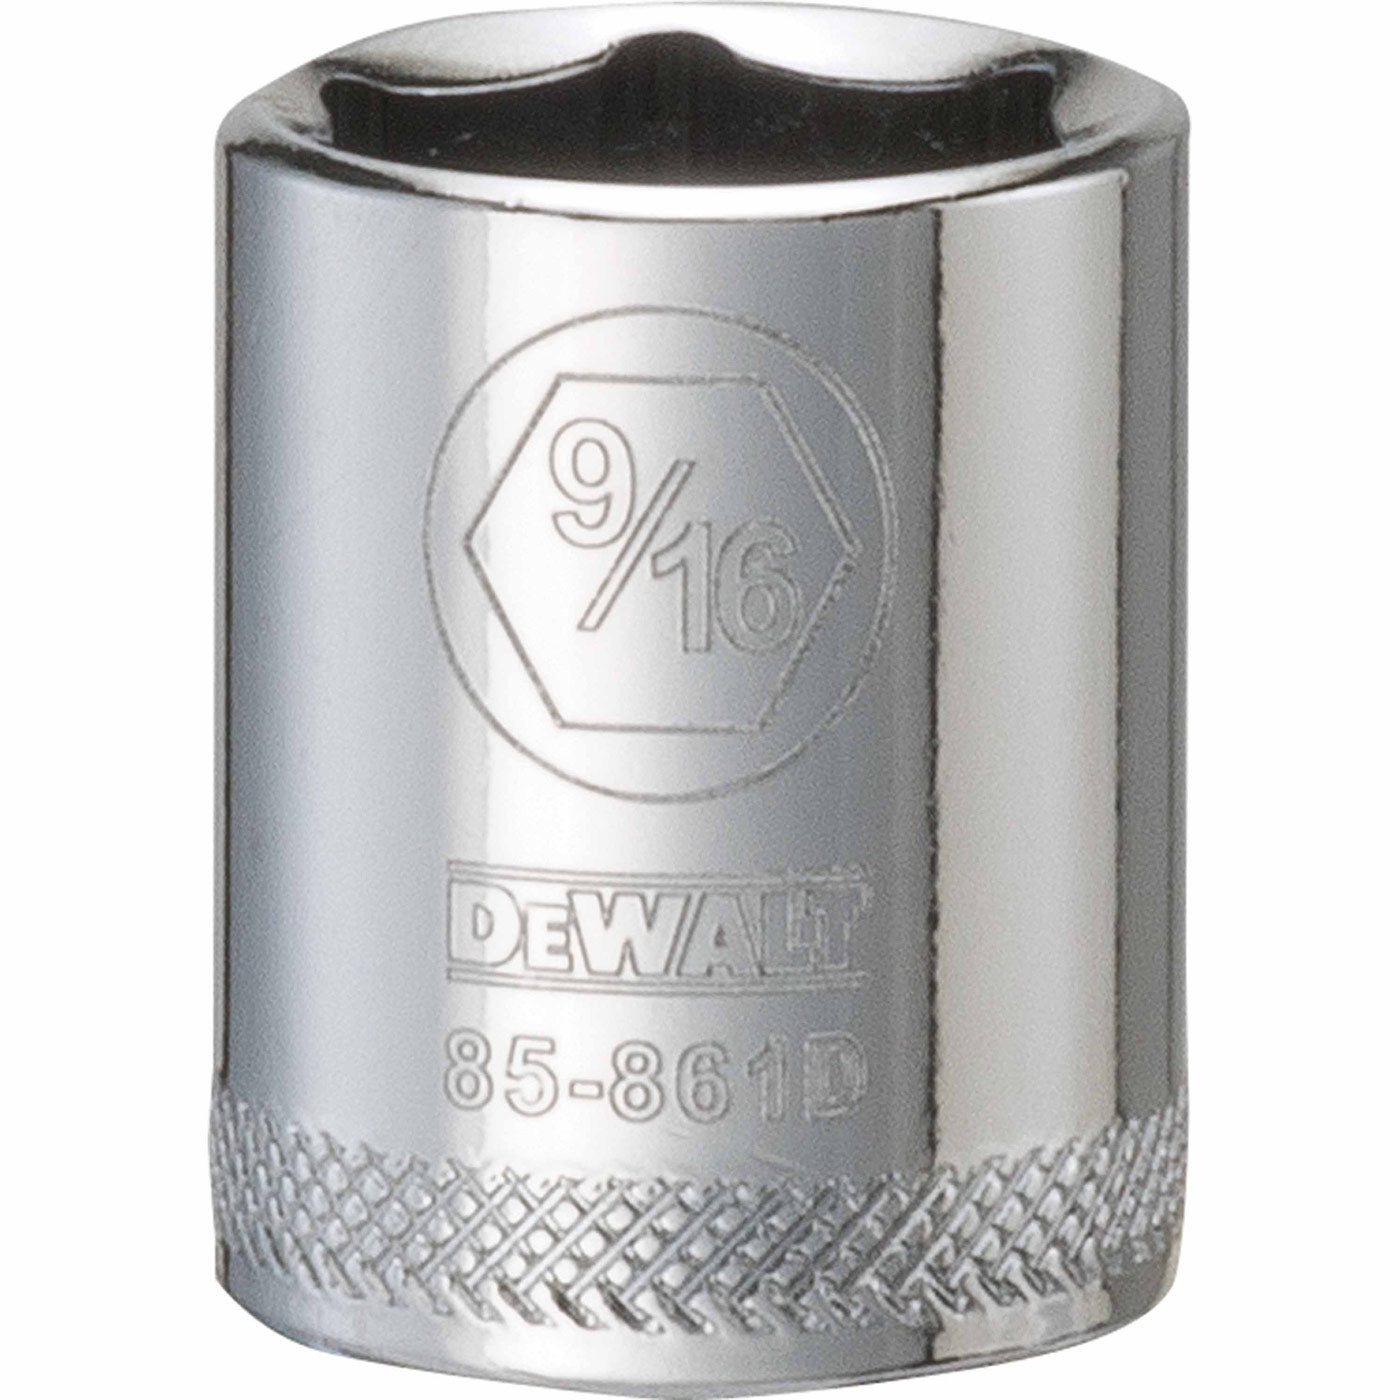 DeWalt DWMT85861OSP Mechanics 6 Point 1/4" Drive Socket 9/16"